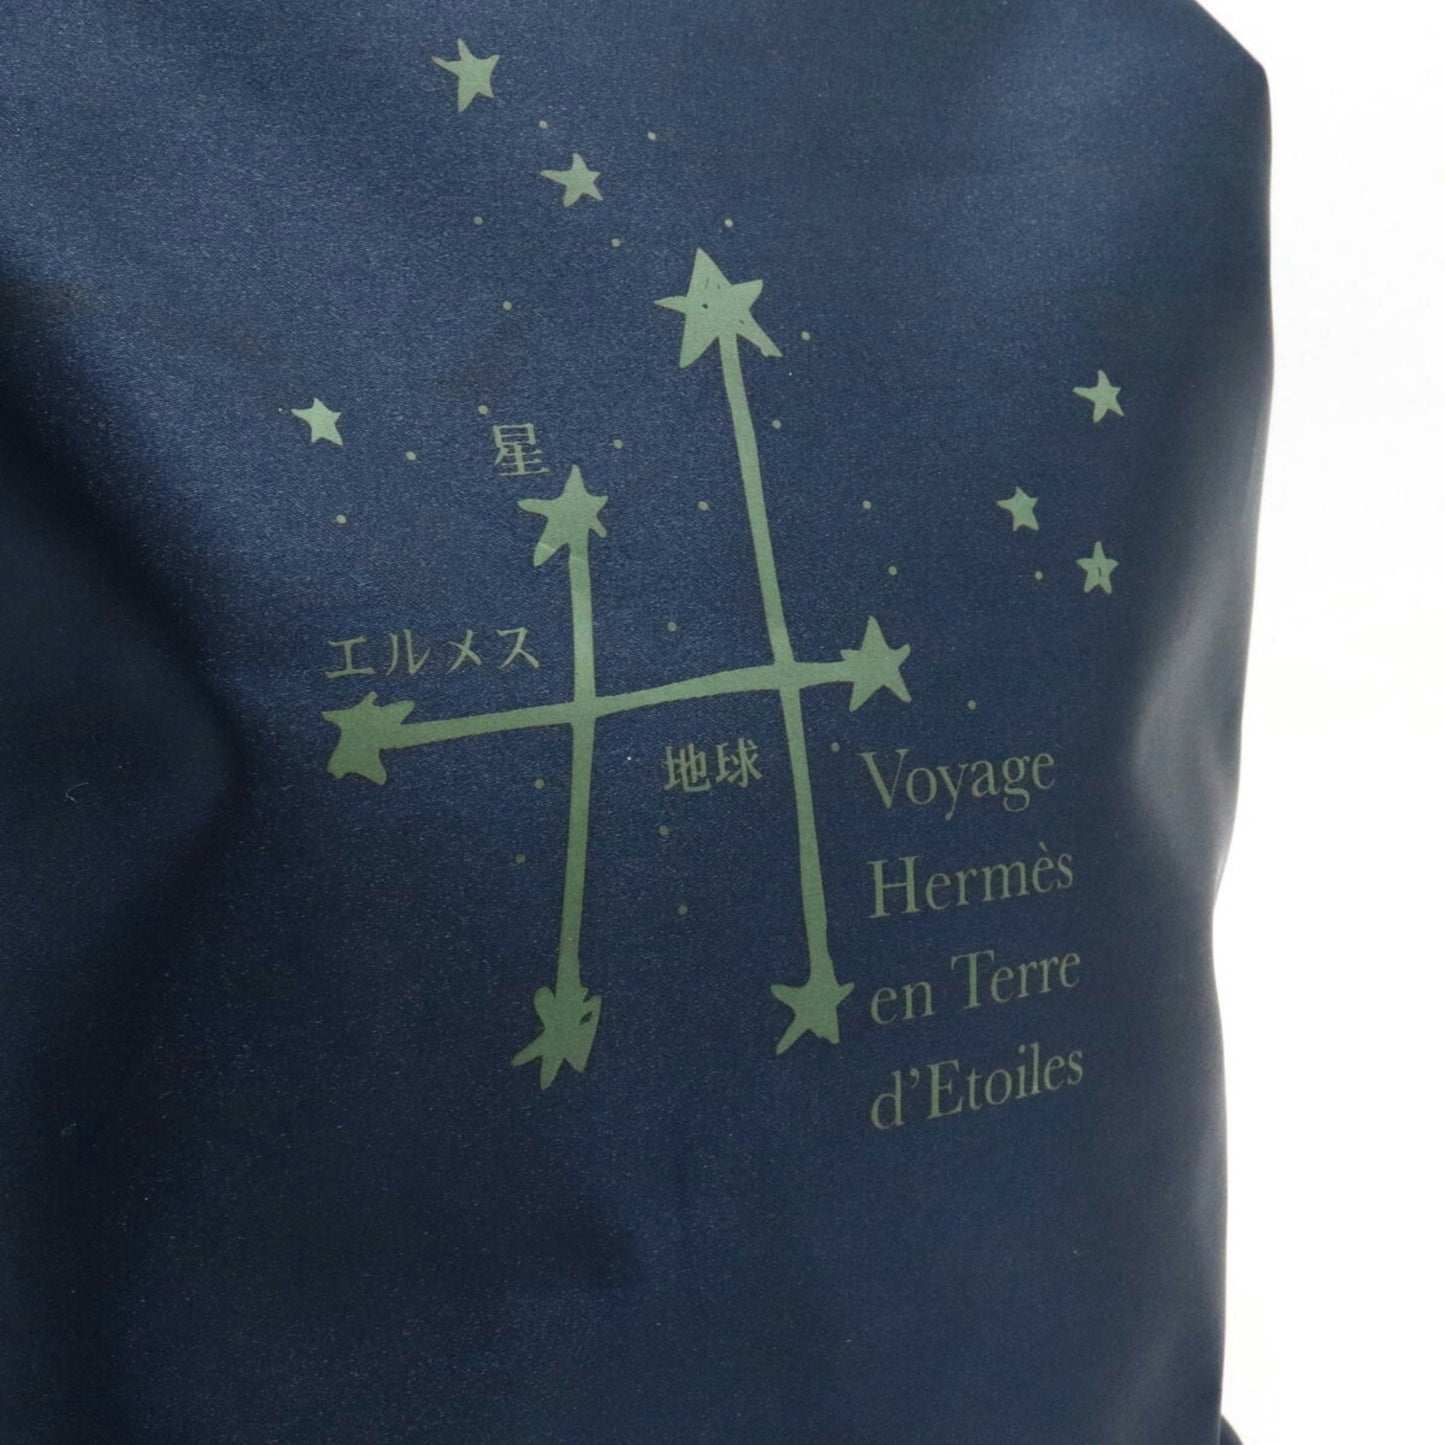 Hermes Women's Navy Synthetic Handbag by Hermes in Navy